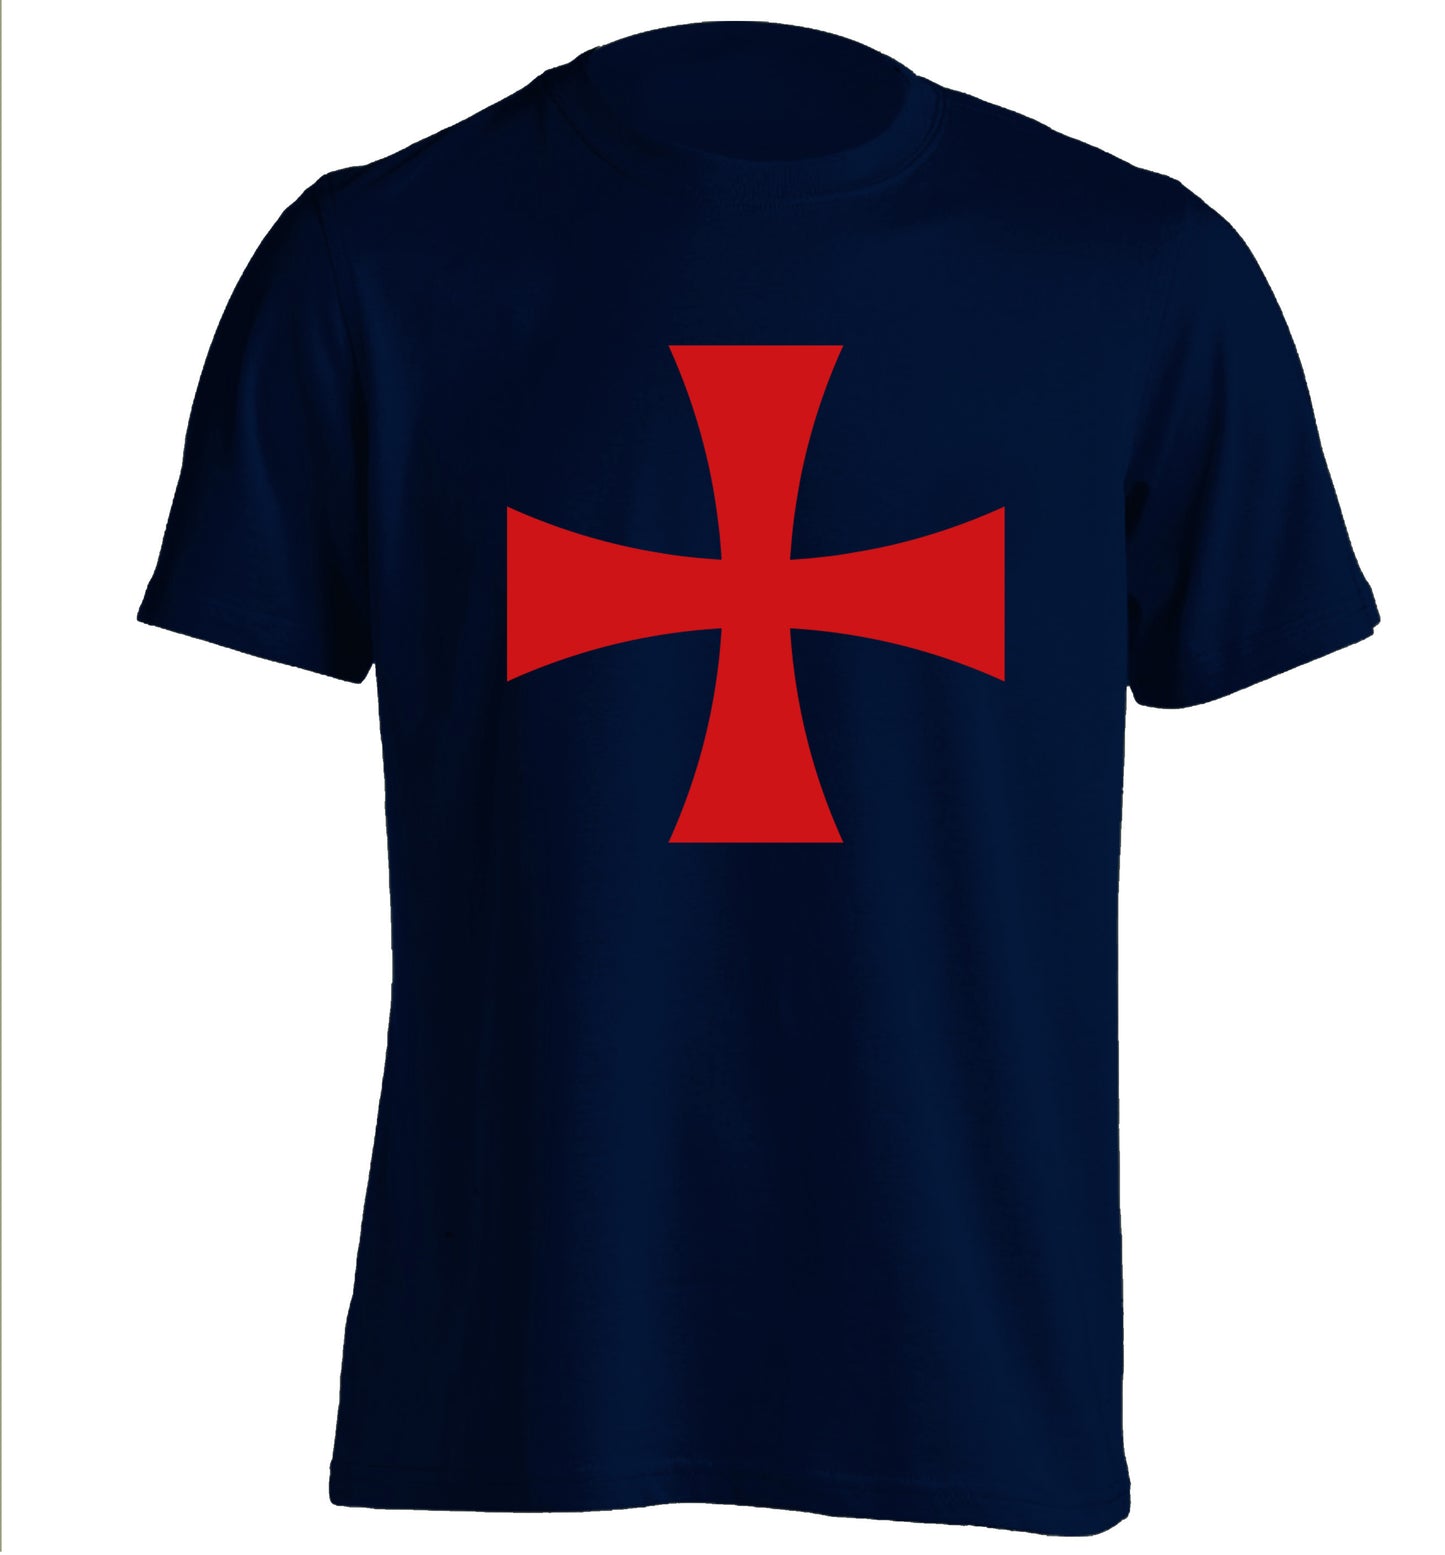 Knights Templar cross adults unisex navy Tshirt 2XL